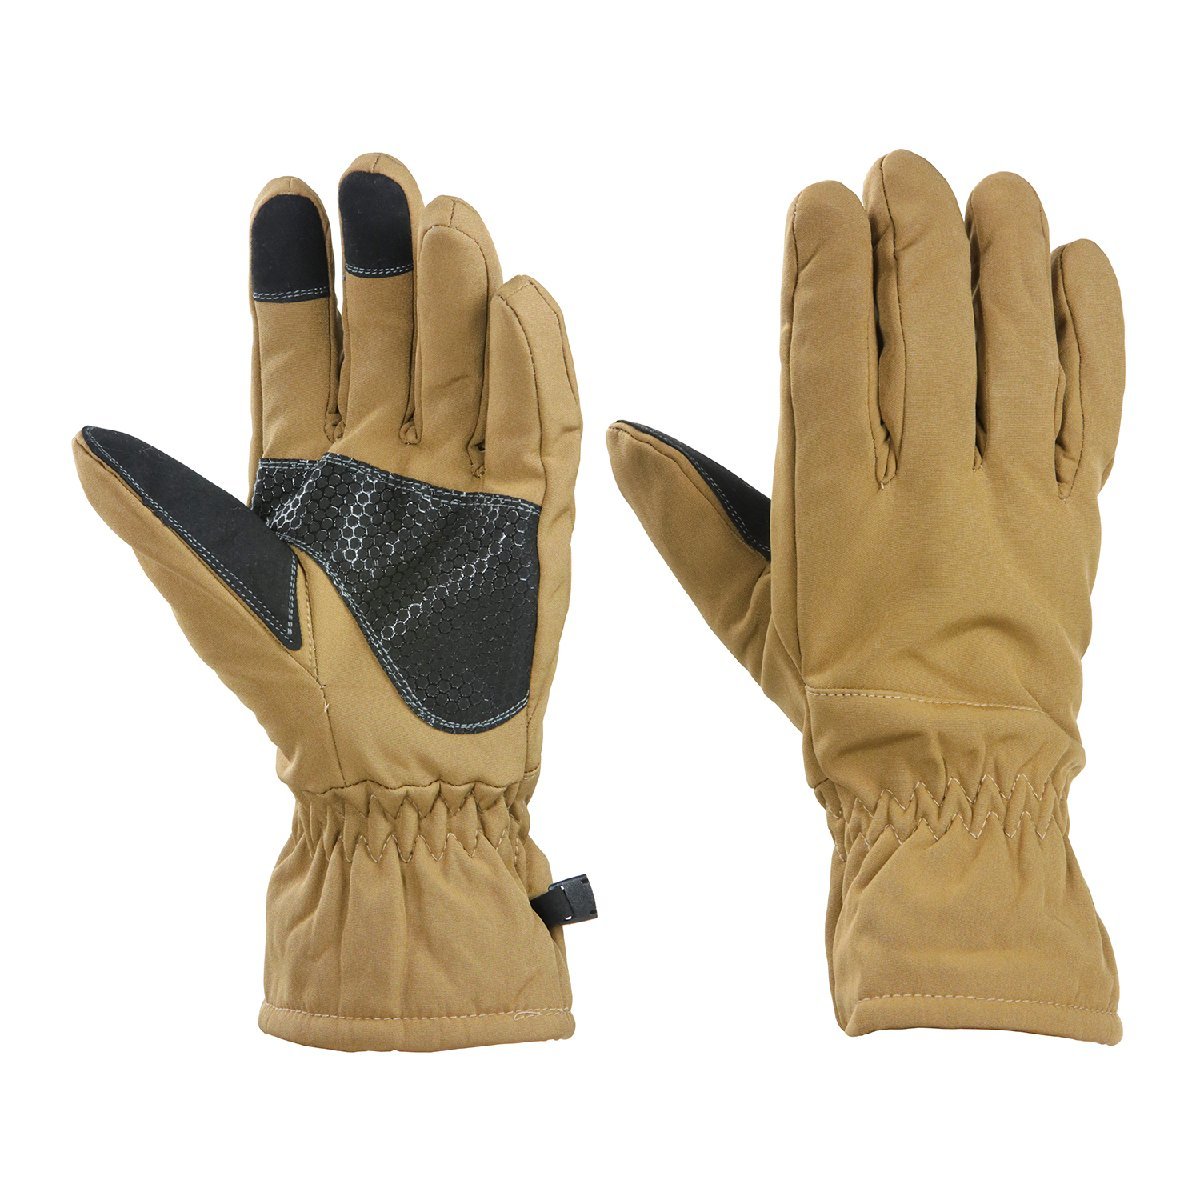  bike glove M size khaki bike gloves slip prevention men's lady's winter glove protection against cold heat insulation ski snowboard mountain climbing outdoor 